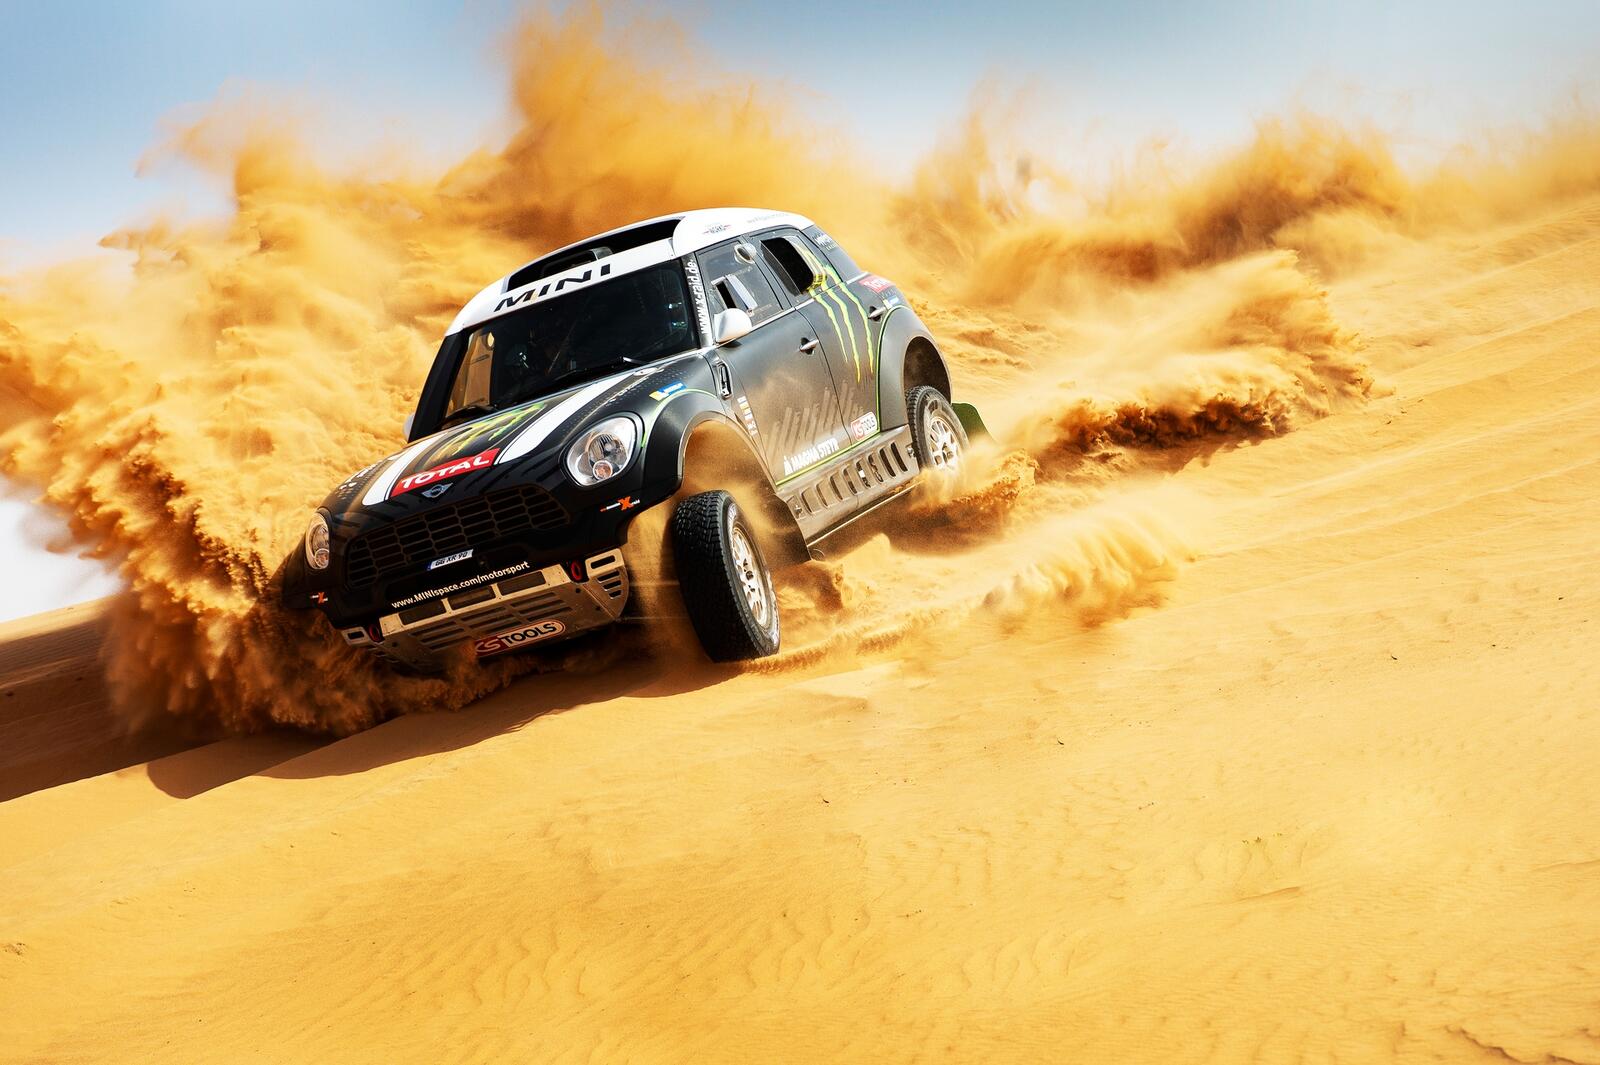 Wallpapers wallpaper rally racing cars sand on the desktop